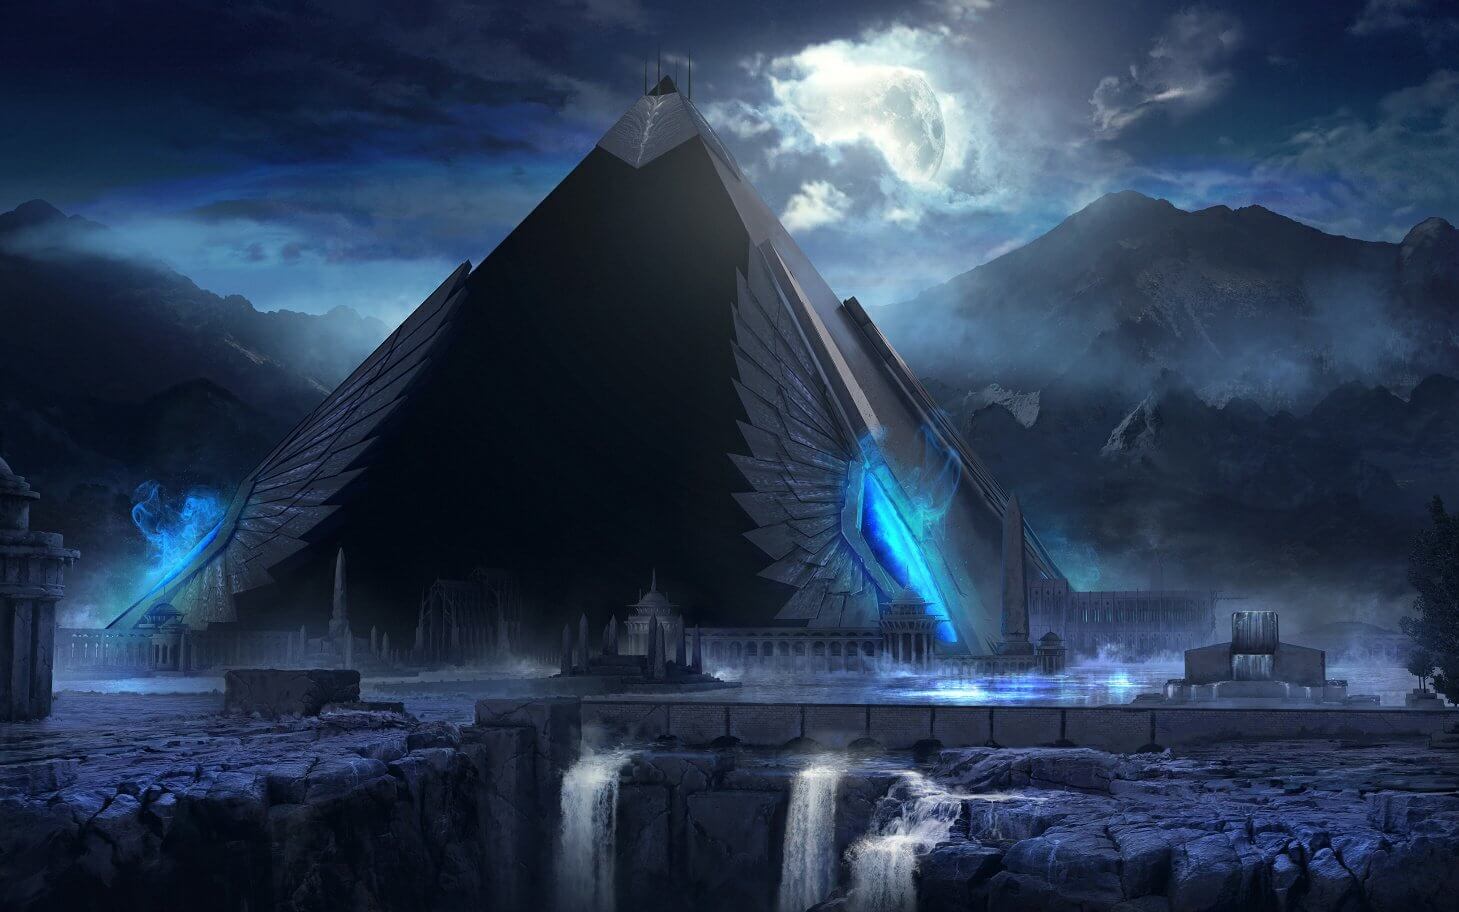 Illustration of the Black Pyramid ©Cc Roskelley